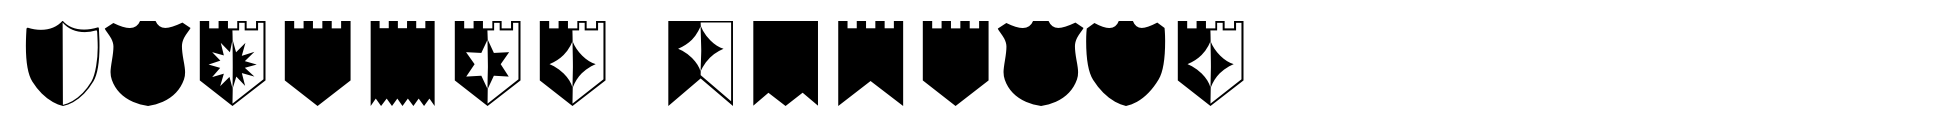 Altemus Shields